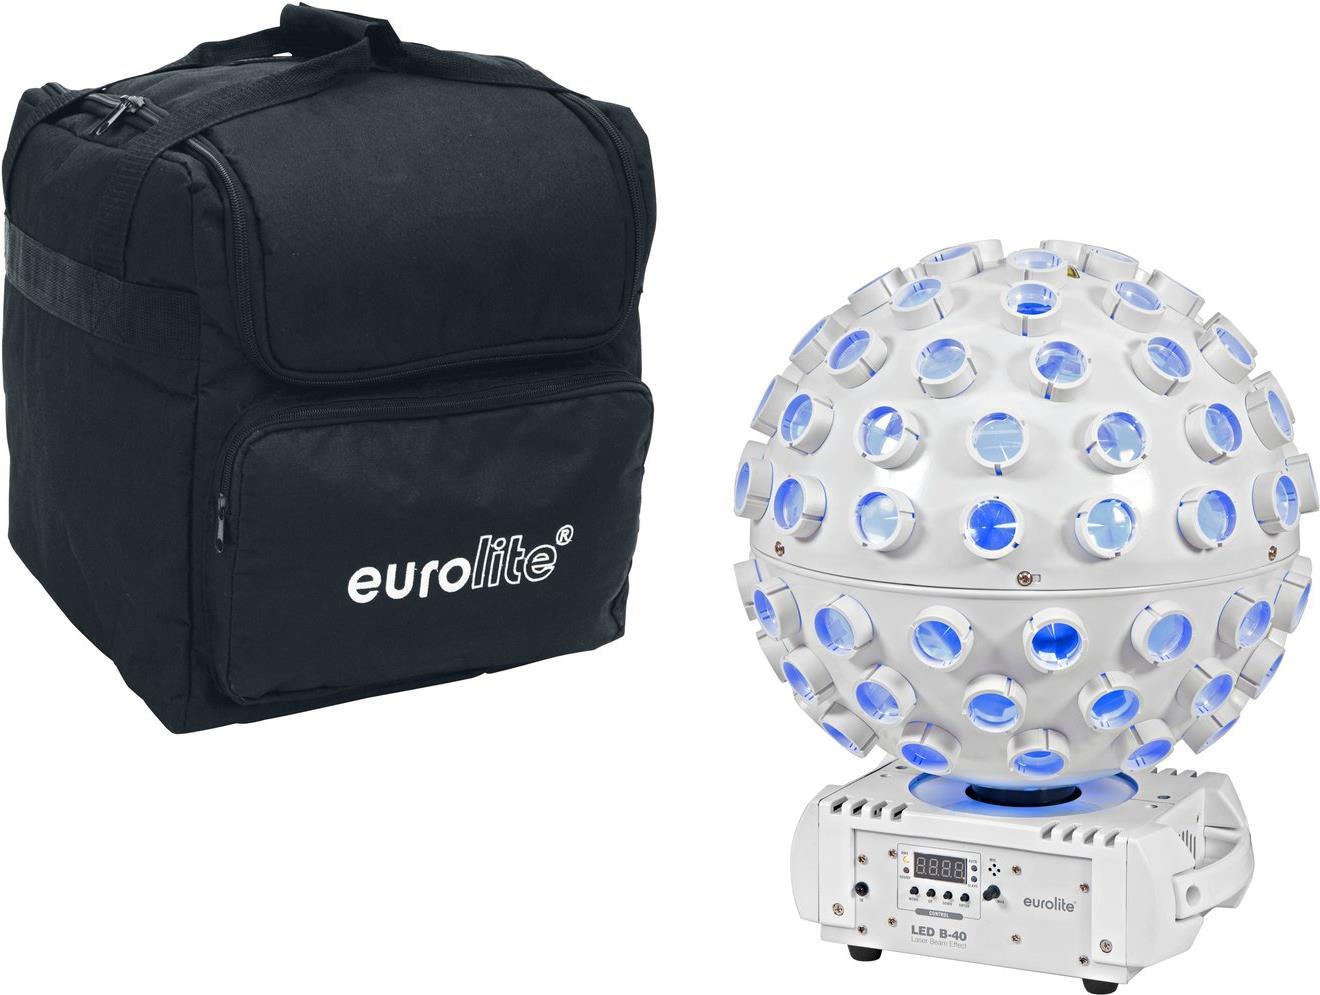 EUROLITE Set LED B-40 Laser Strahleneffekt ws + Soft-Bag (20000914)